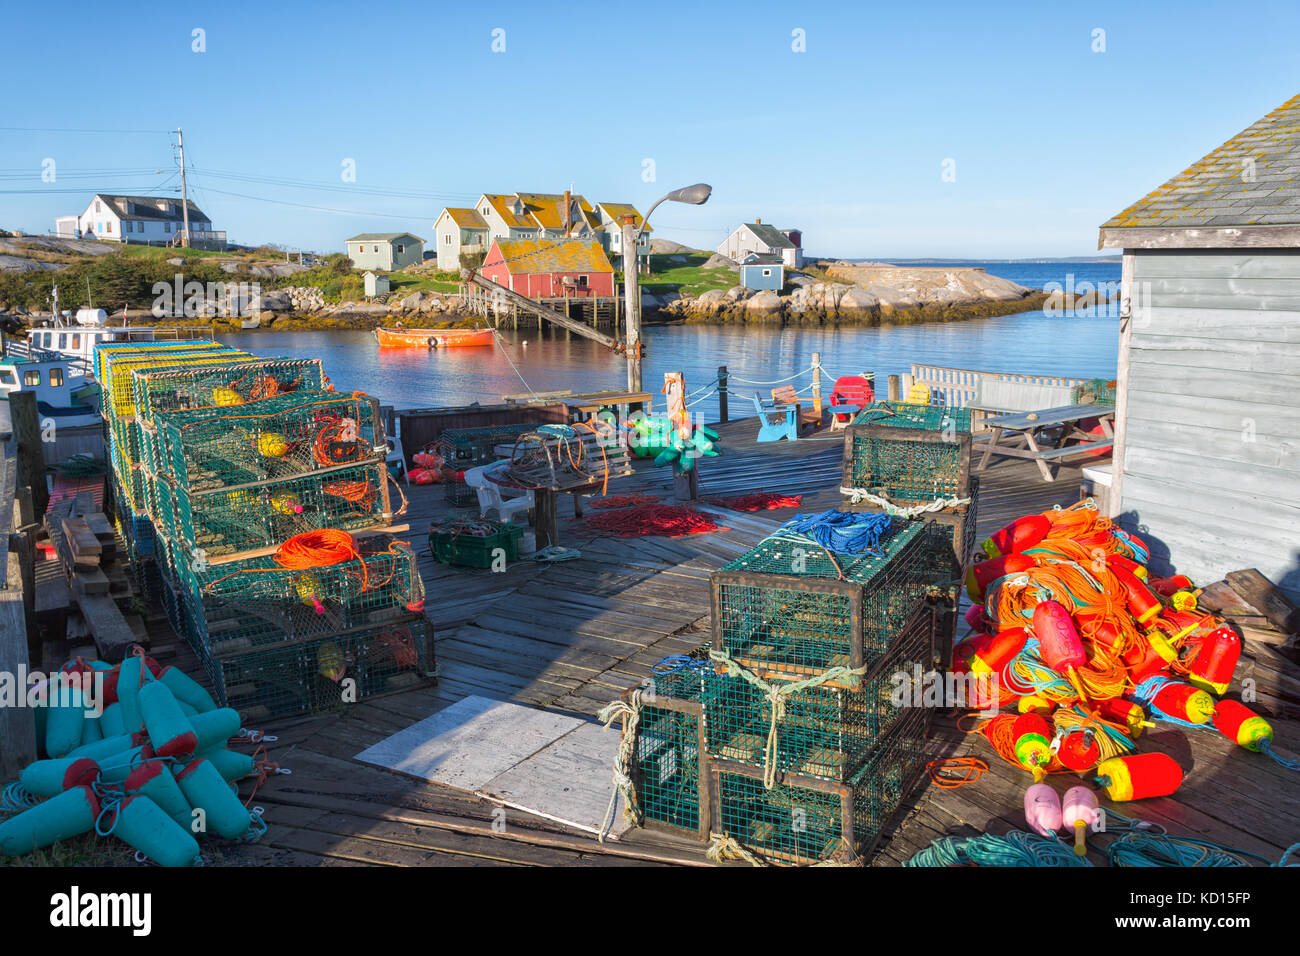 Les engins de pêche sur le quai, Peggy's Cove, Nova Scotia, canada Banque D'Images